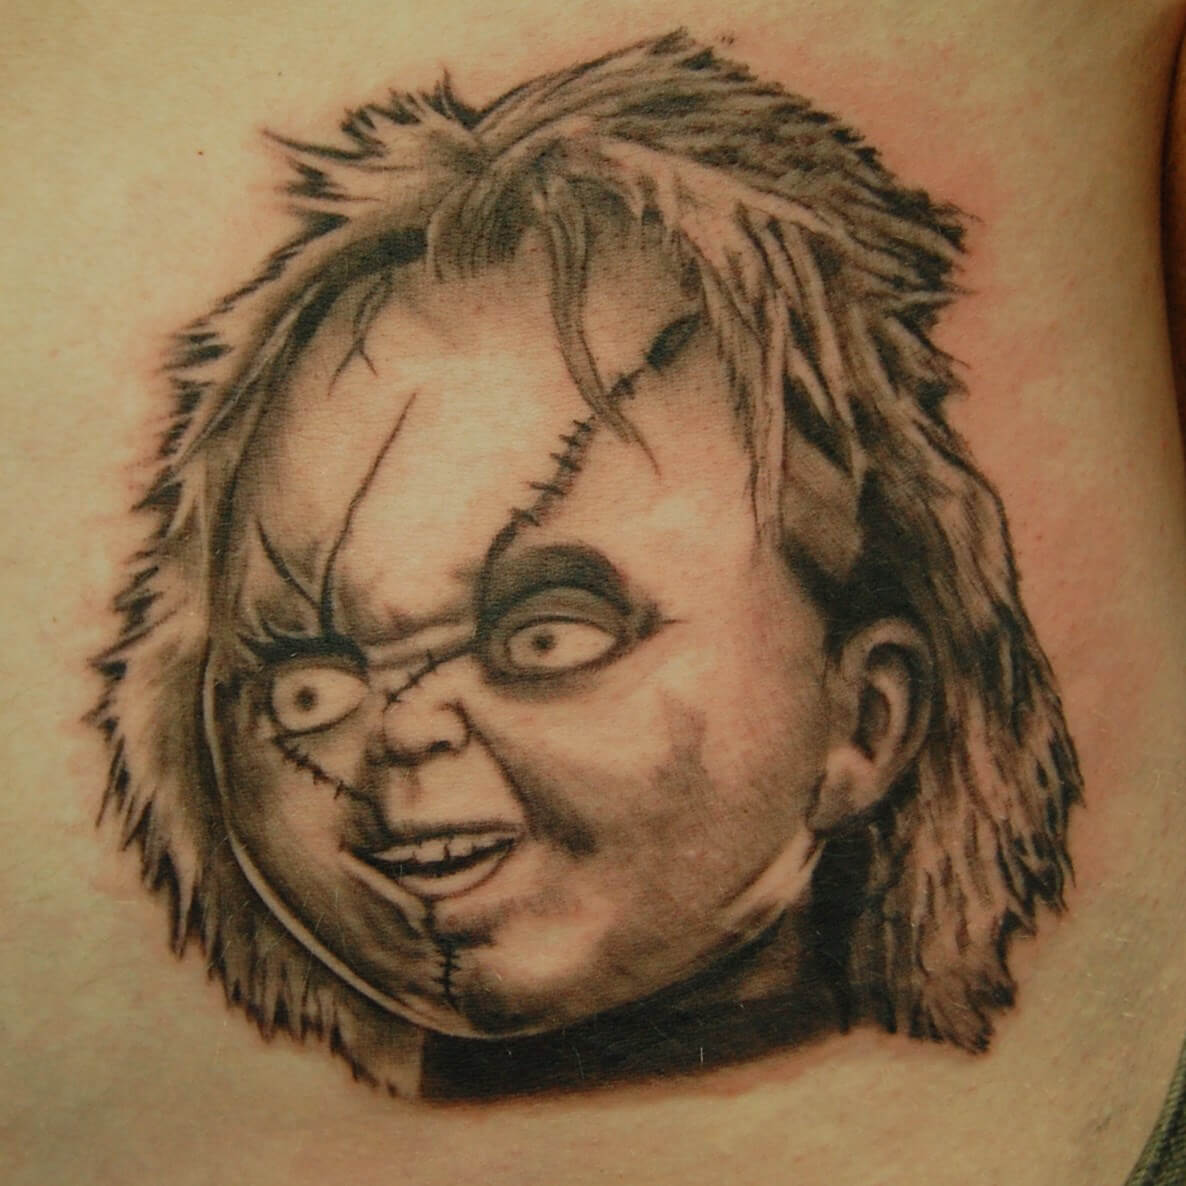 Horror Temporary Tattoo Bloody Chucky from Childs Play Scary Skull  Halloween  eBay